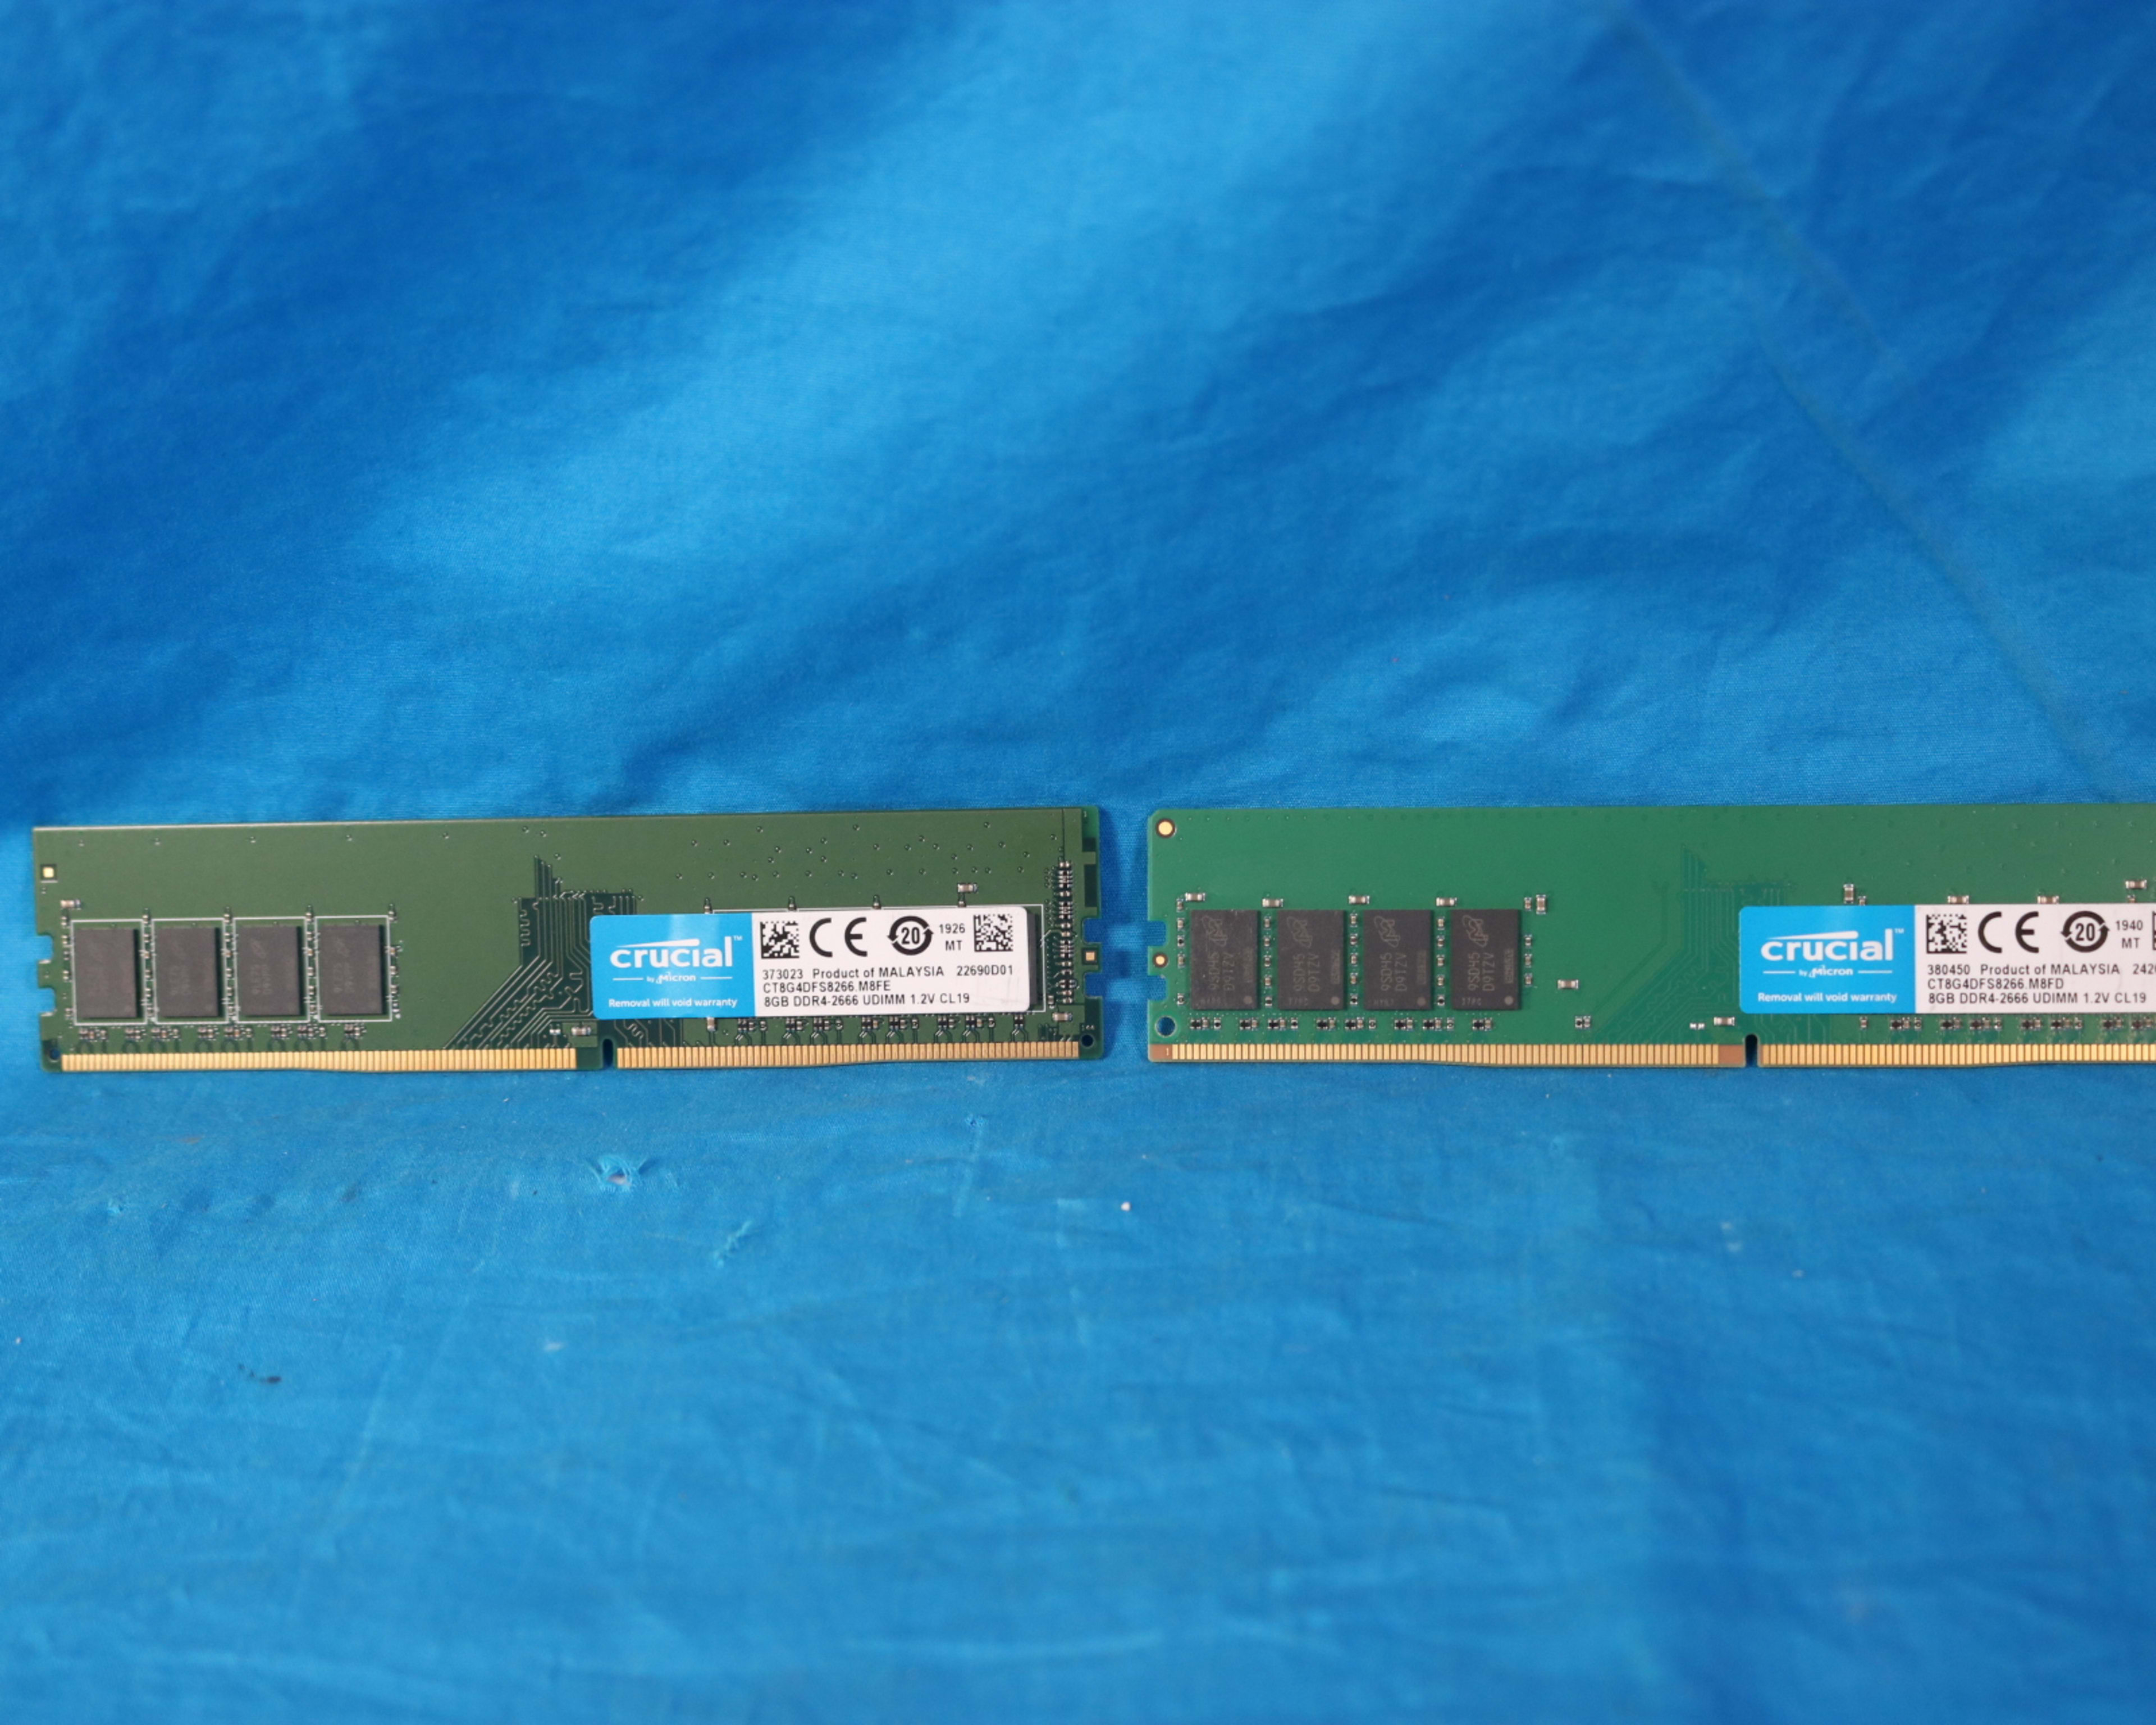 16GB Kit of 2666mhz Crucial DDR4 Desktop DIMM Memory Sticks (2x 8GB) - 4730755079